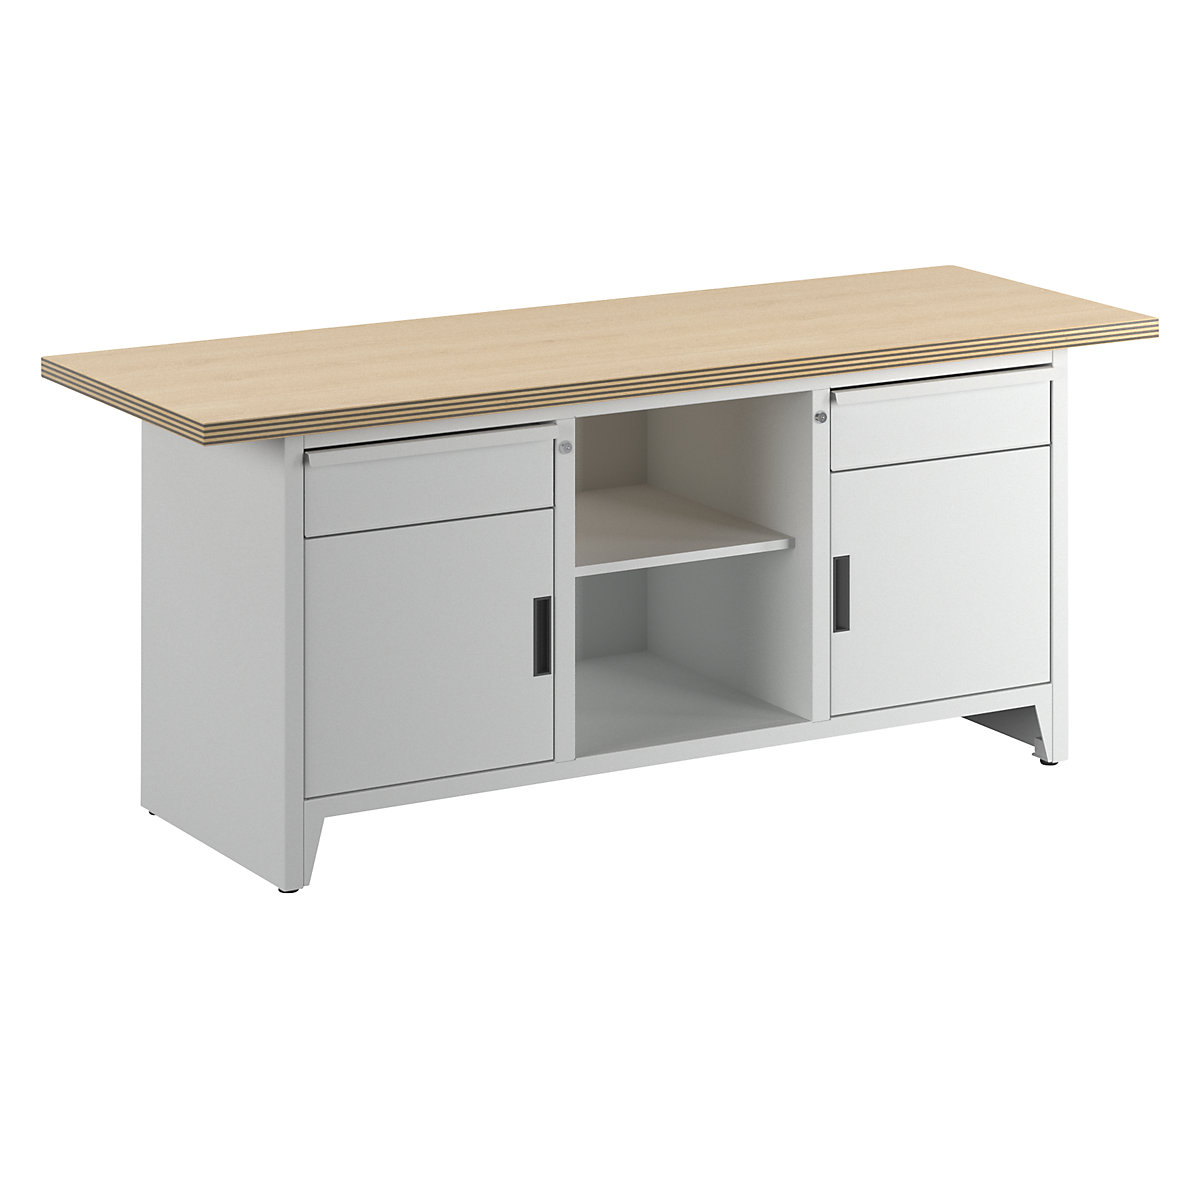 Workbench width 2000 mm, frame construction – LISTA, 2 drawers, 2 doors, 4 shelves, body light grey, front light grey-2